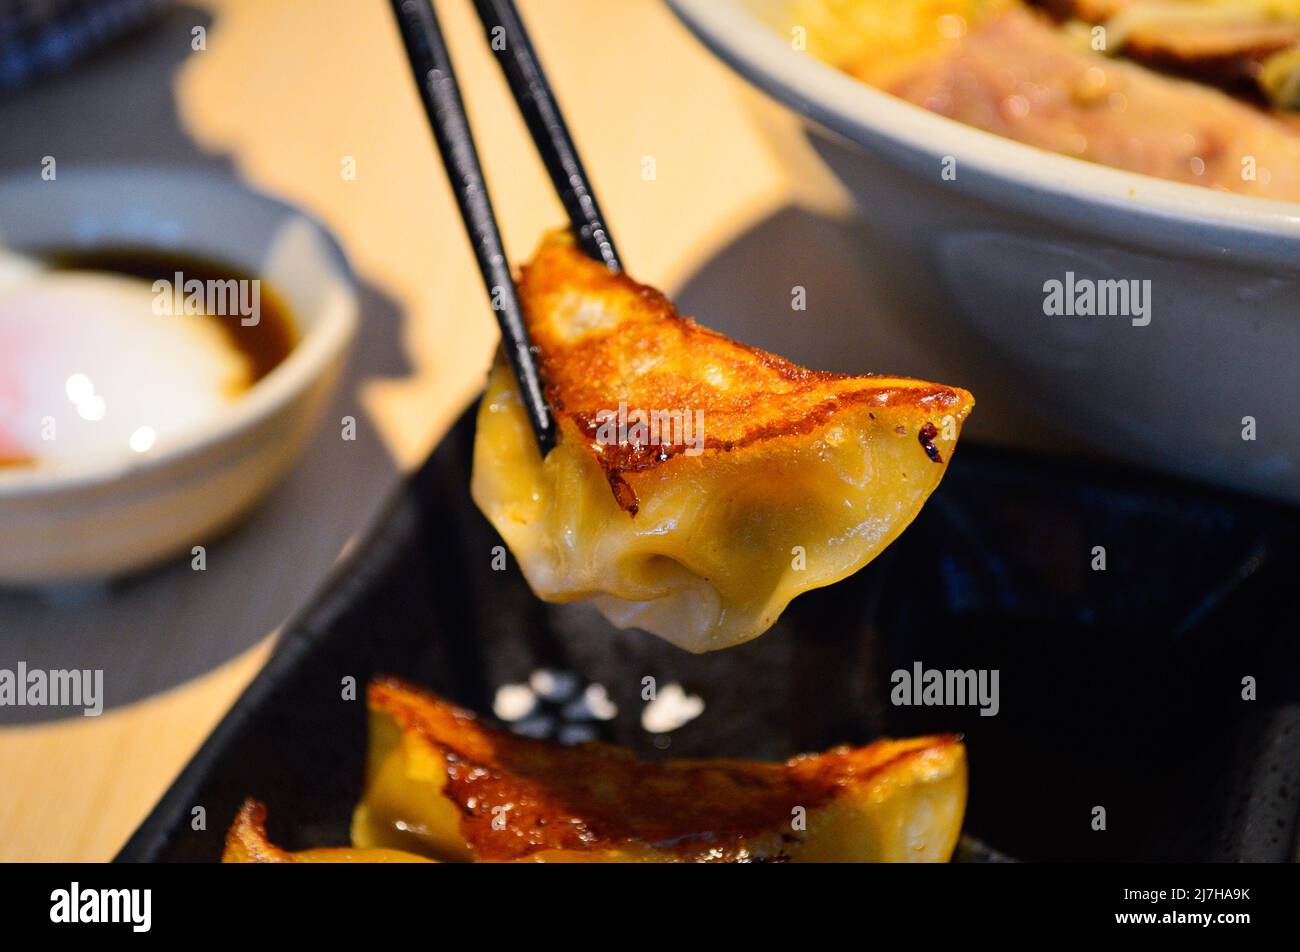 Chopsticks pick up Japanese style fried gyoza (dumplings) from a black plate. Stock Photo